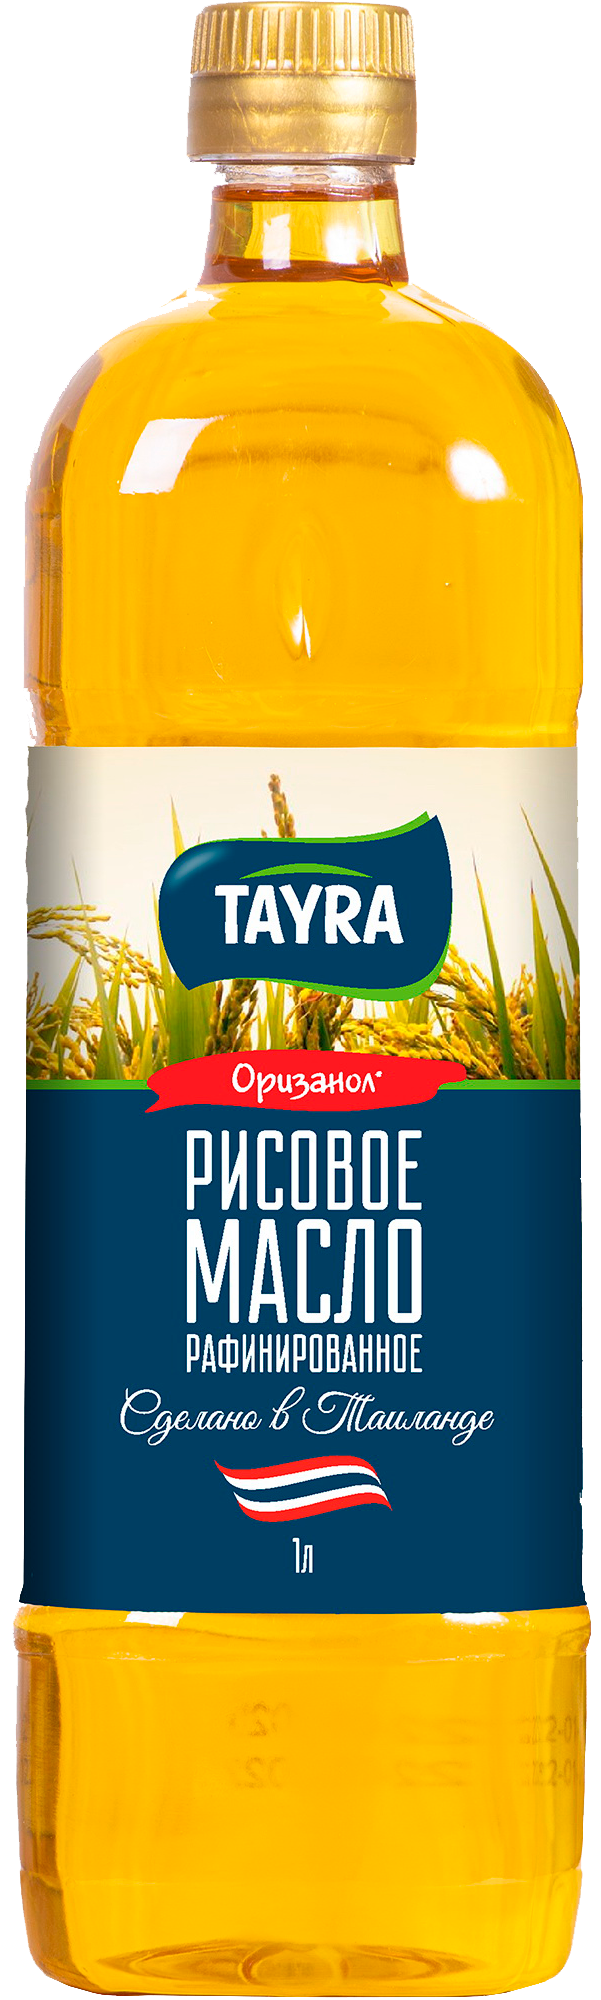 Рисовое масло, 1 л, TAYRA